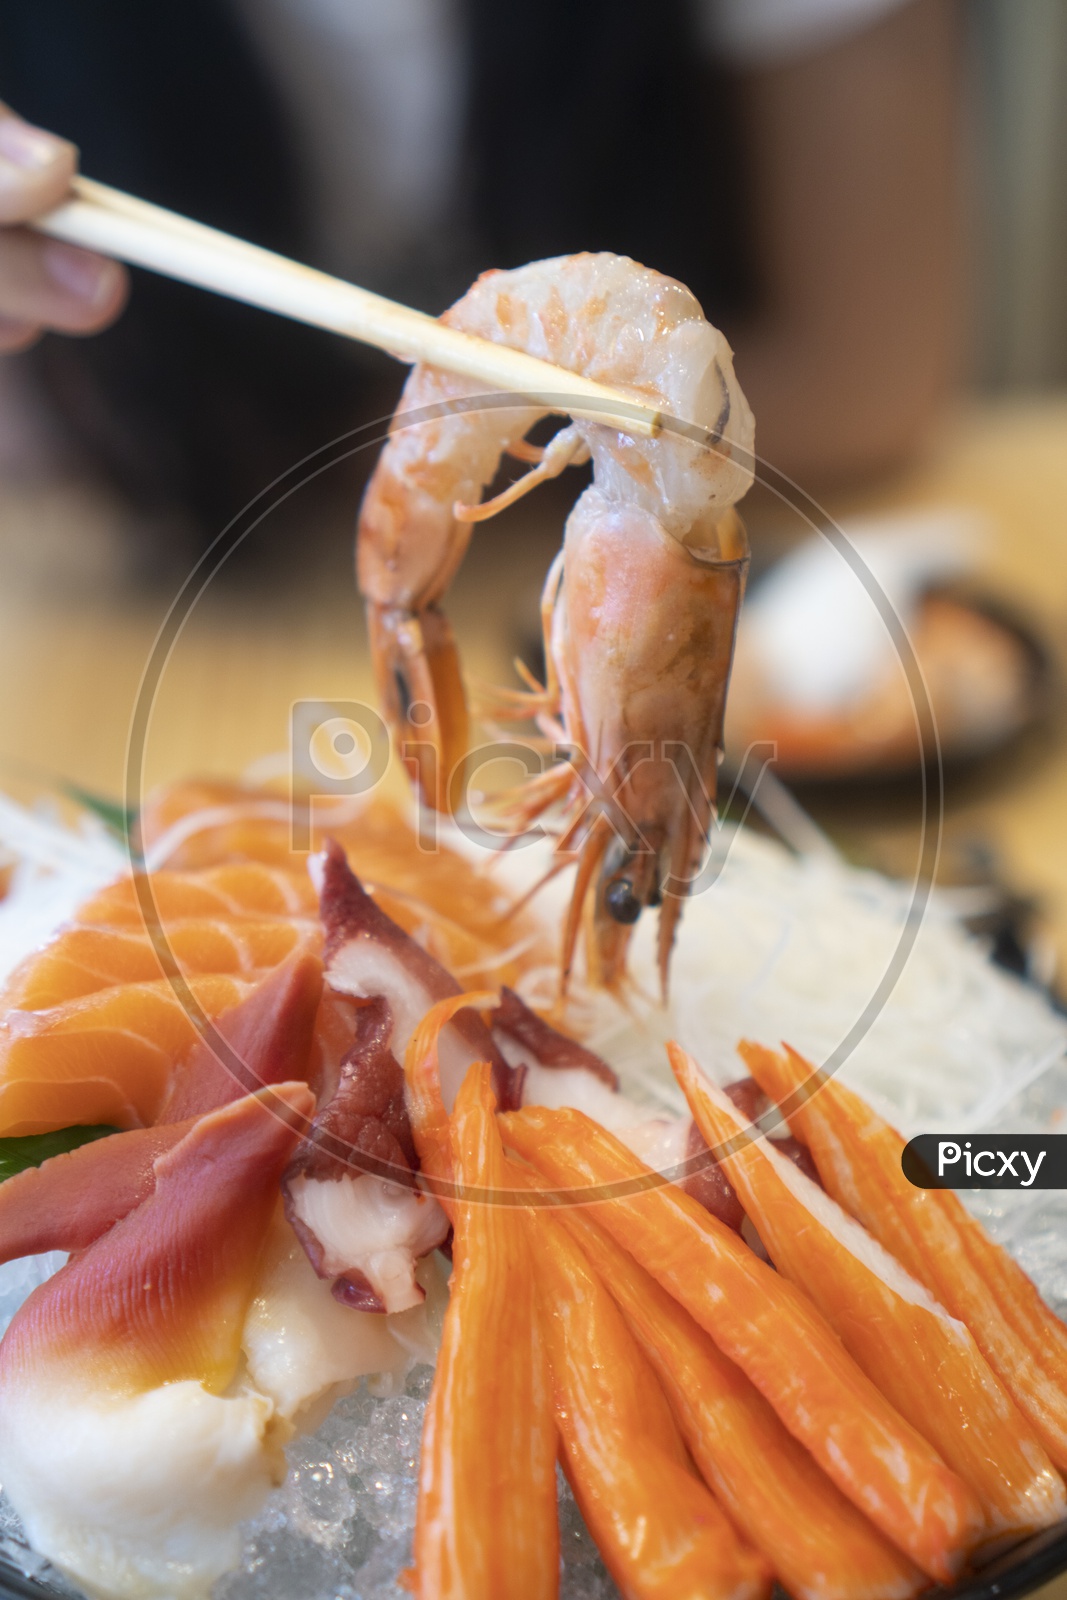 A Man eating sashimi sets Fresh quality Japanese food with Chopsticks